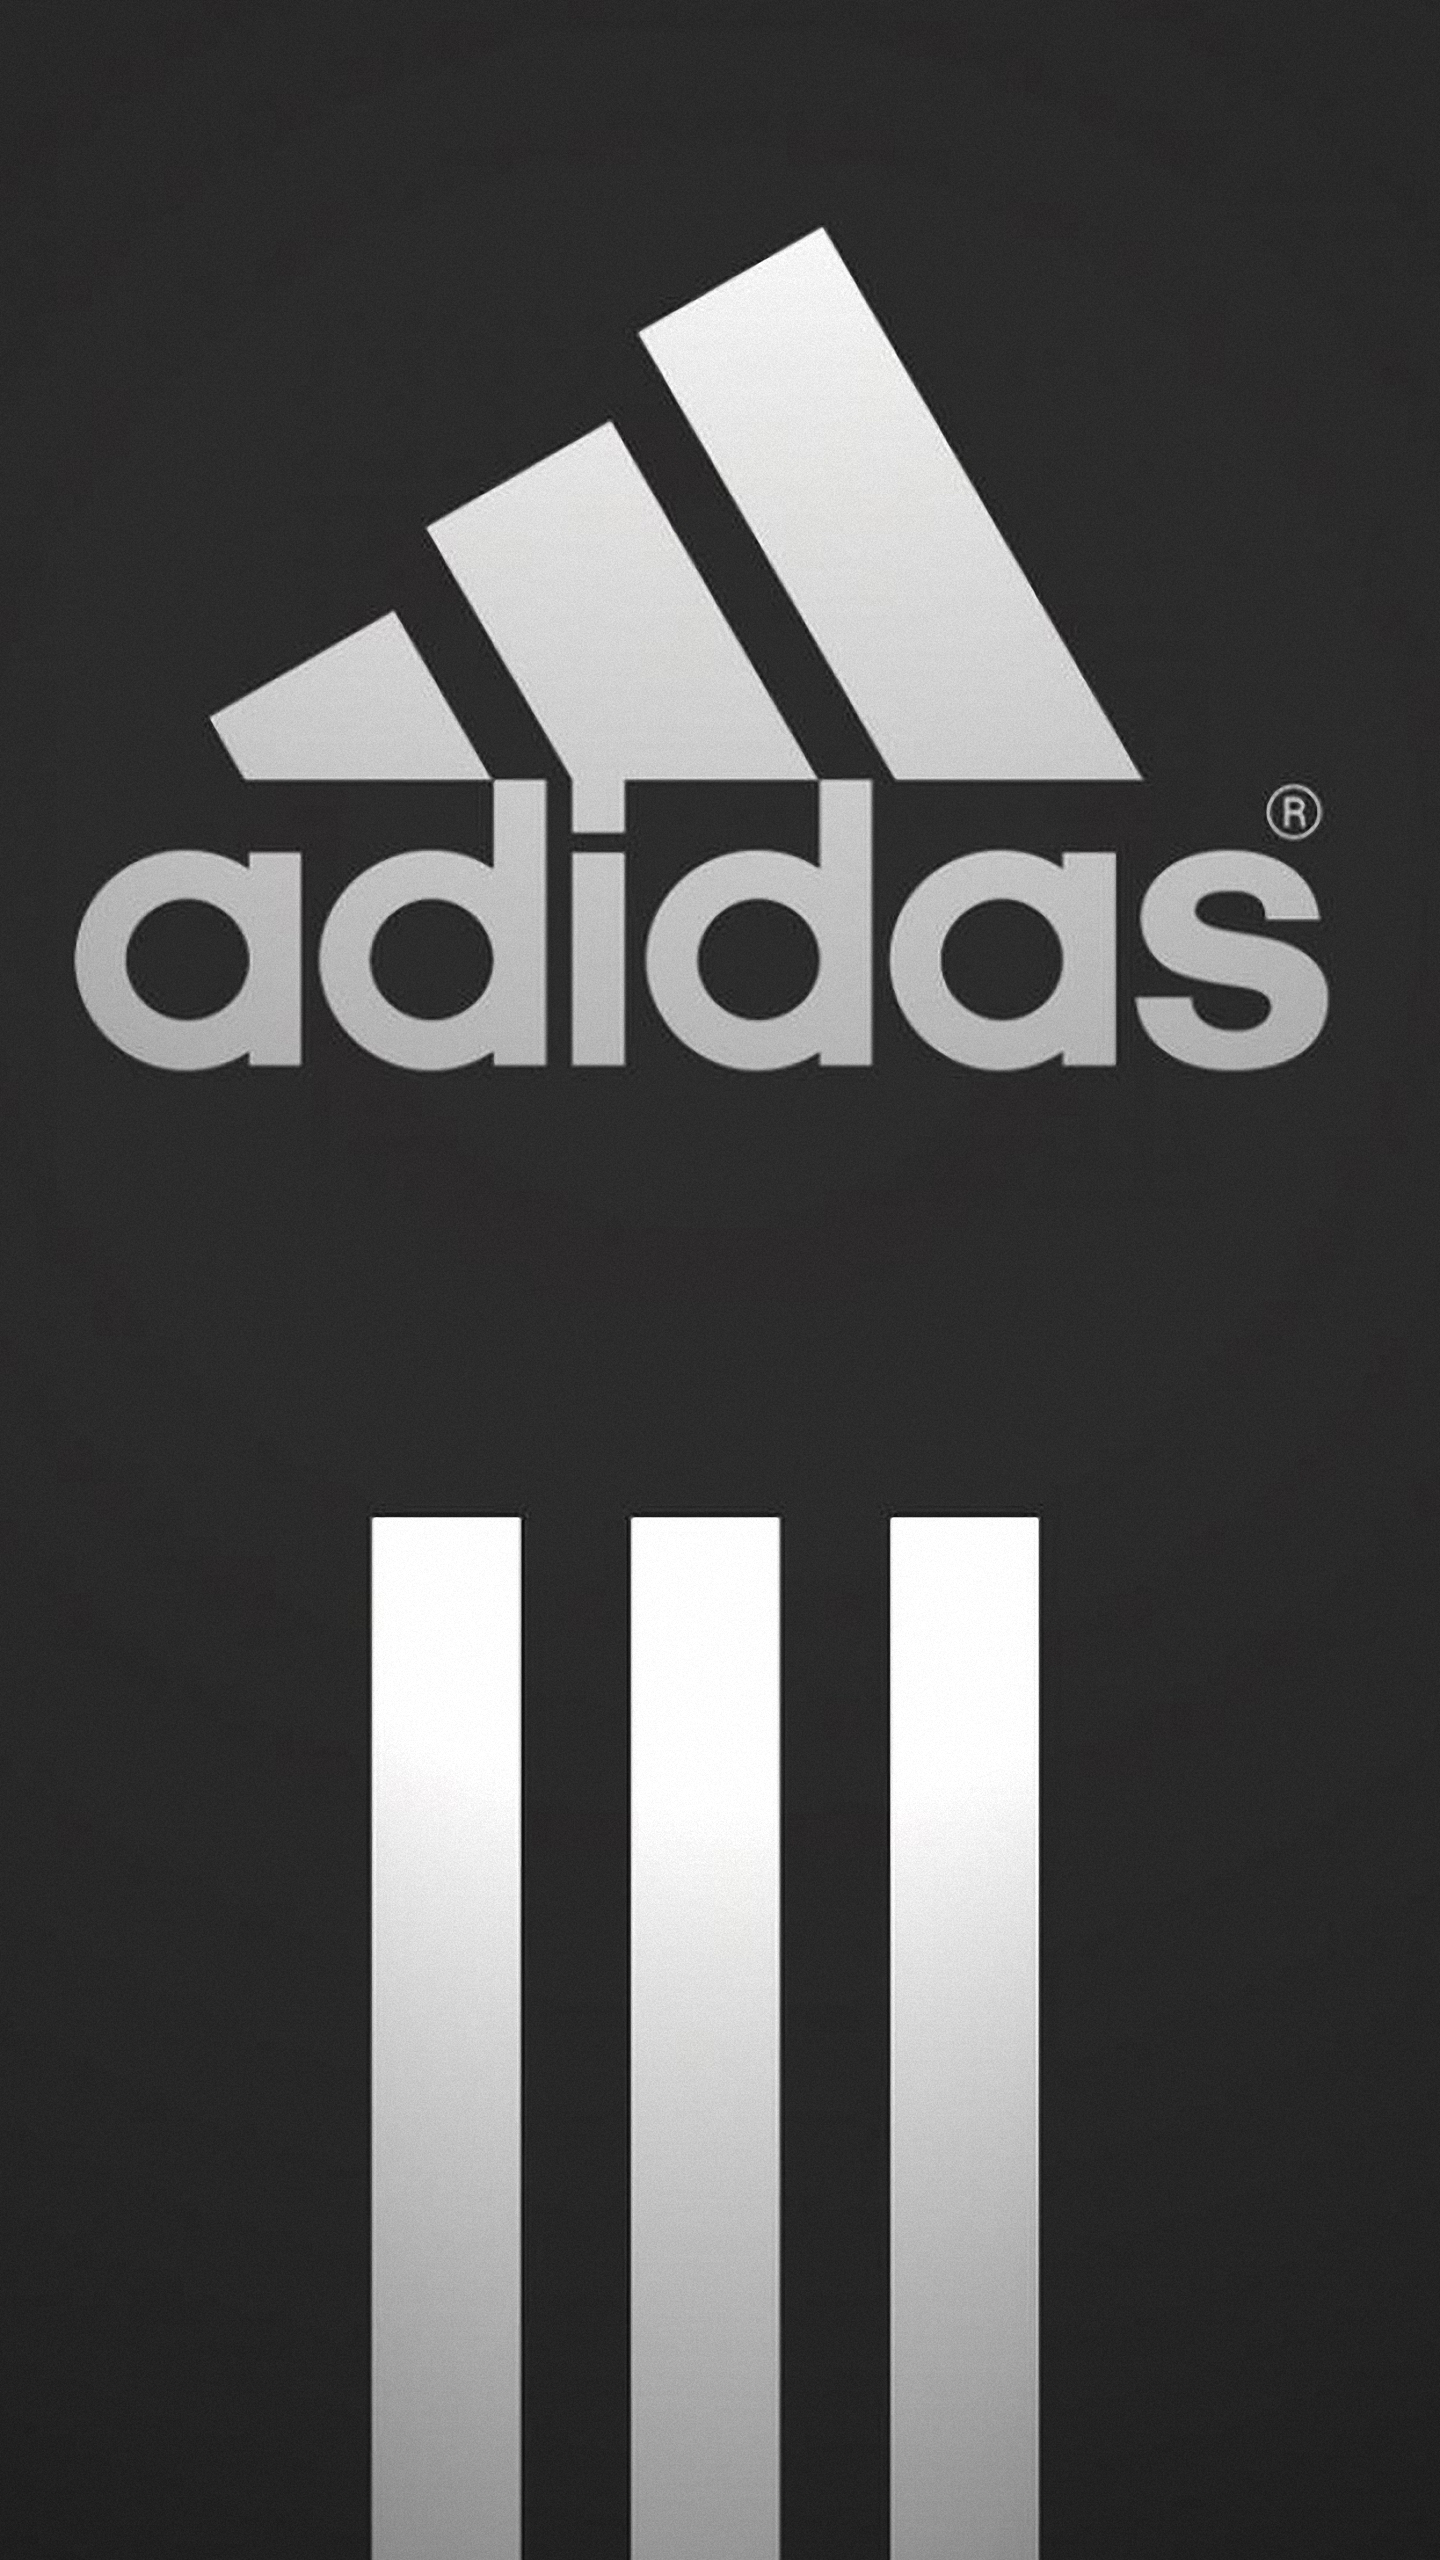 adidas logo iphone wallpaper